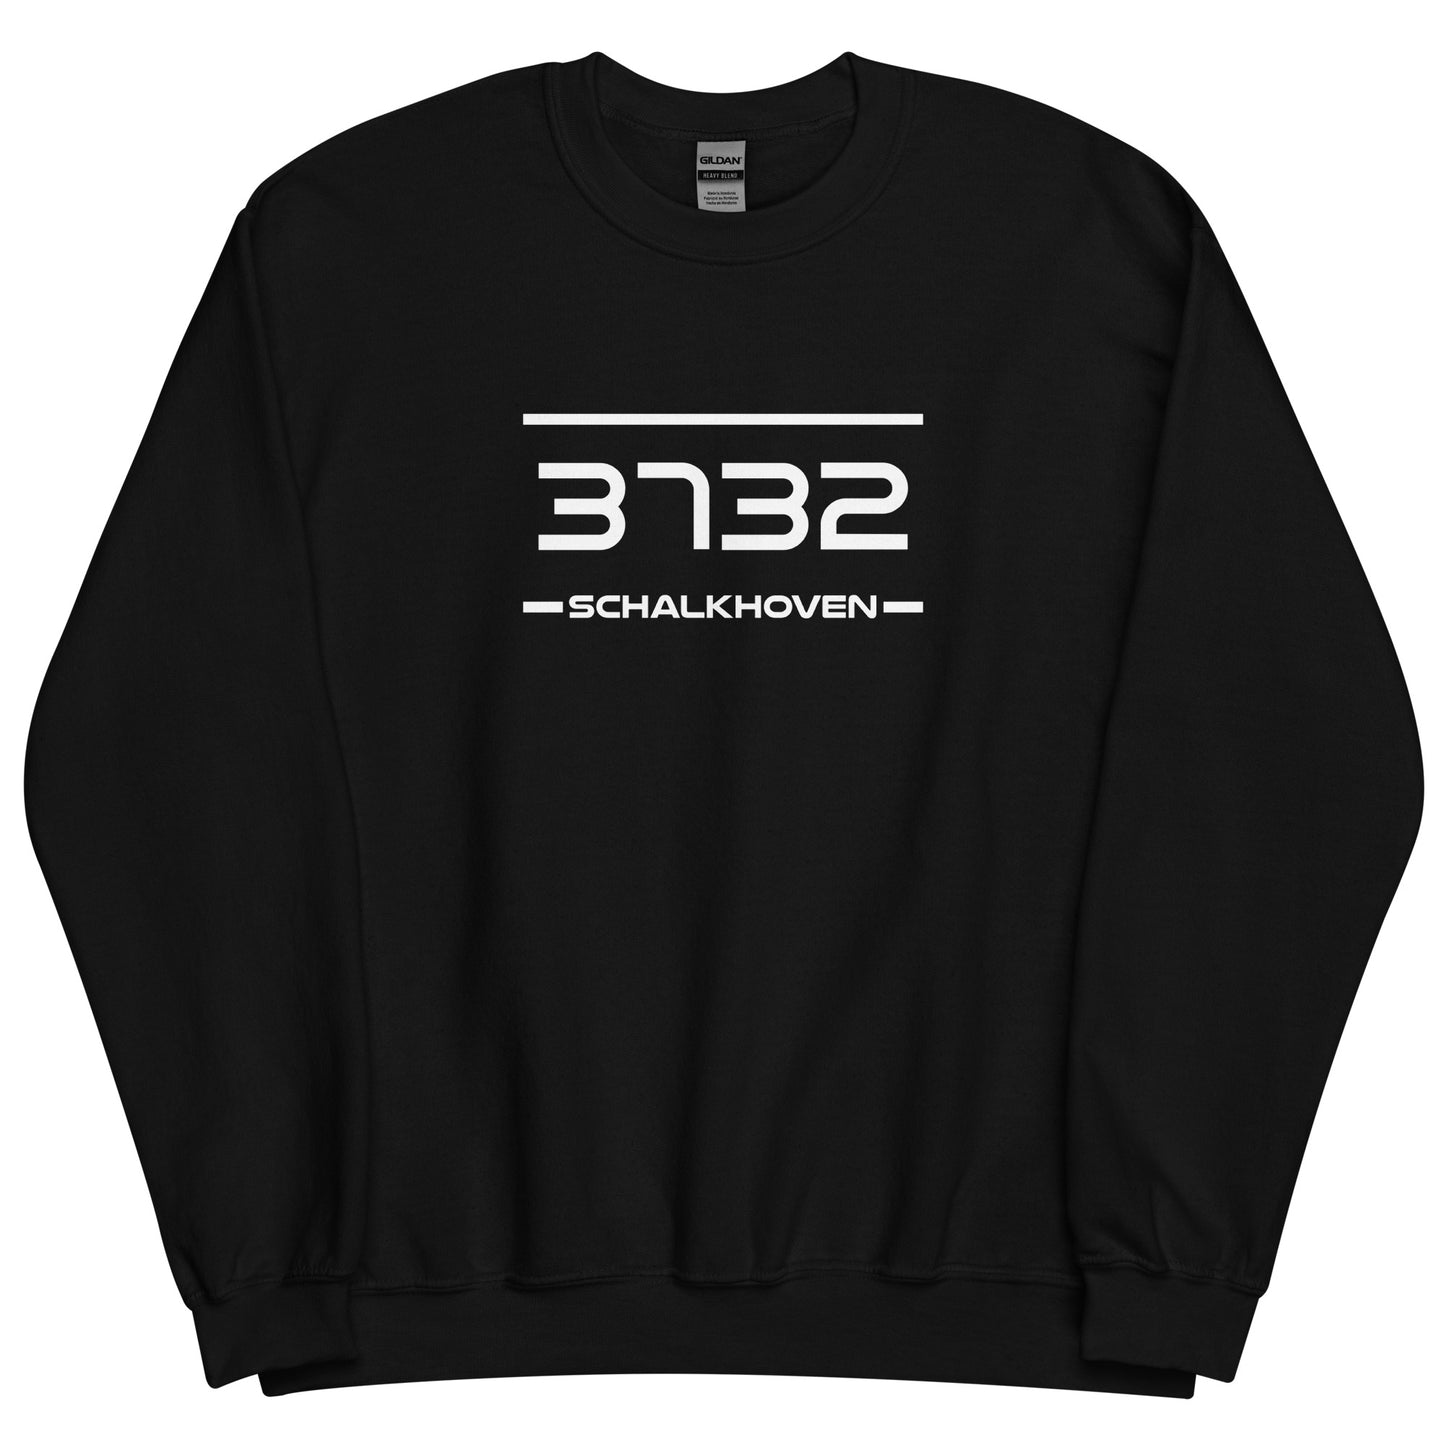 Sweater - 3732 - Schalkhoven (M/V)